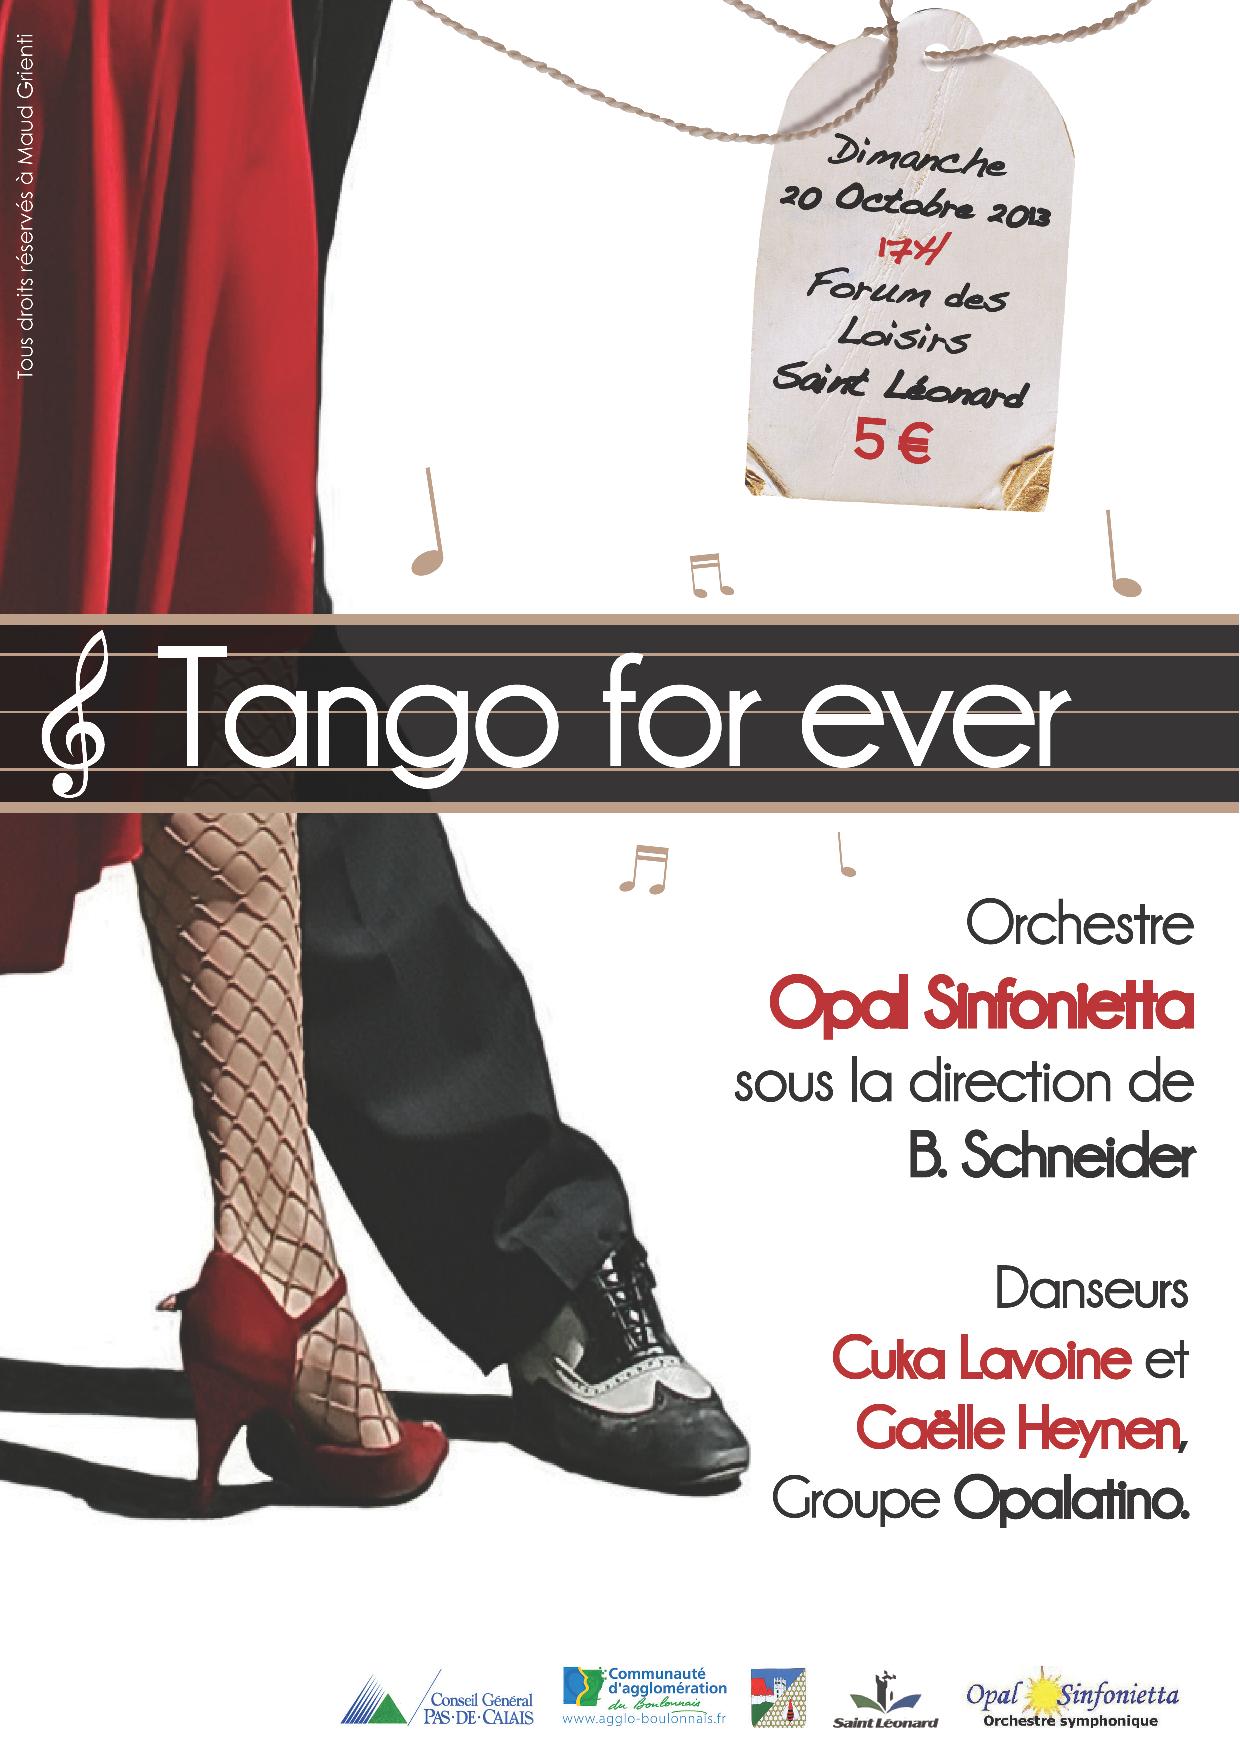 affiche St leonard 20 octobre 2013 Tango